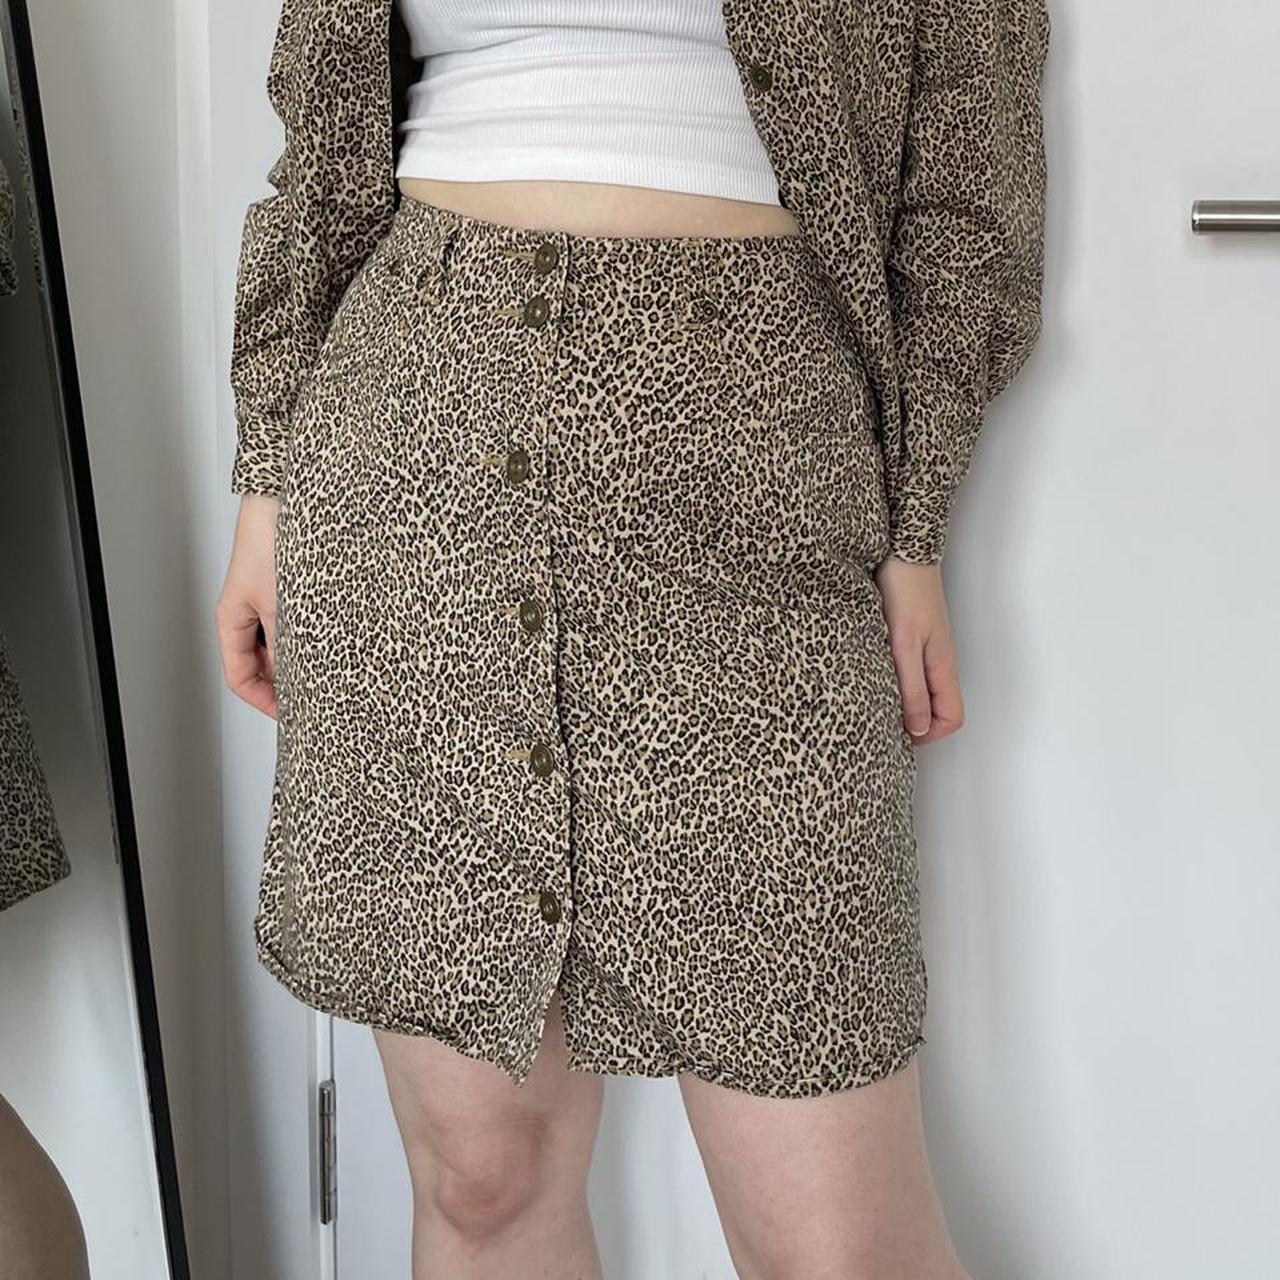 Liz Claiborne Women's Tan and Brown Skirt (4)